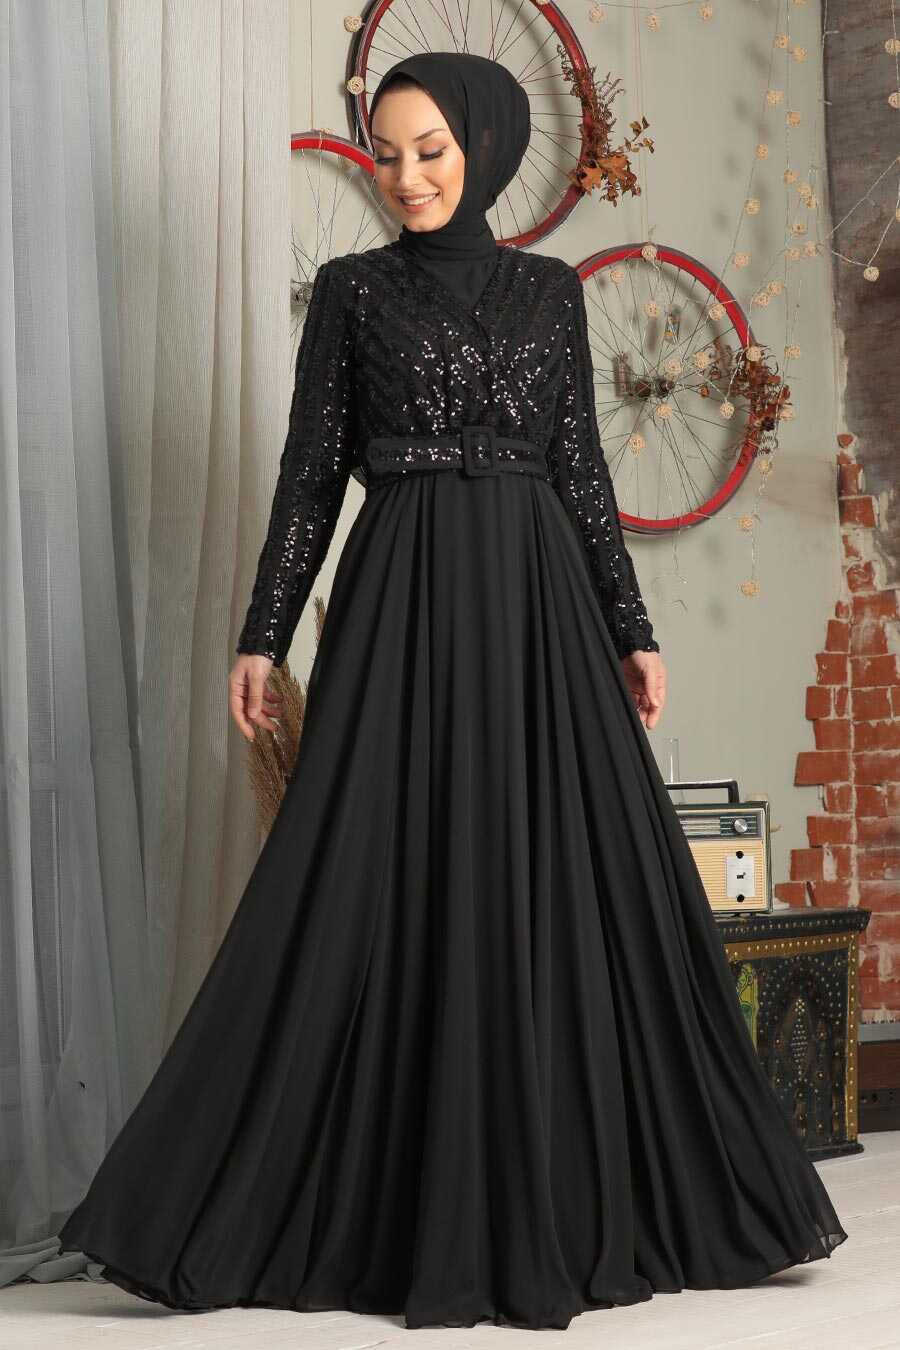 Black Hijab Evening Dress 3316S - Neva-style.com